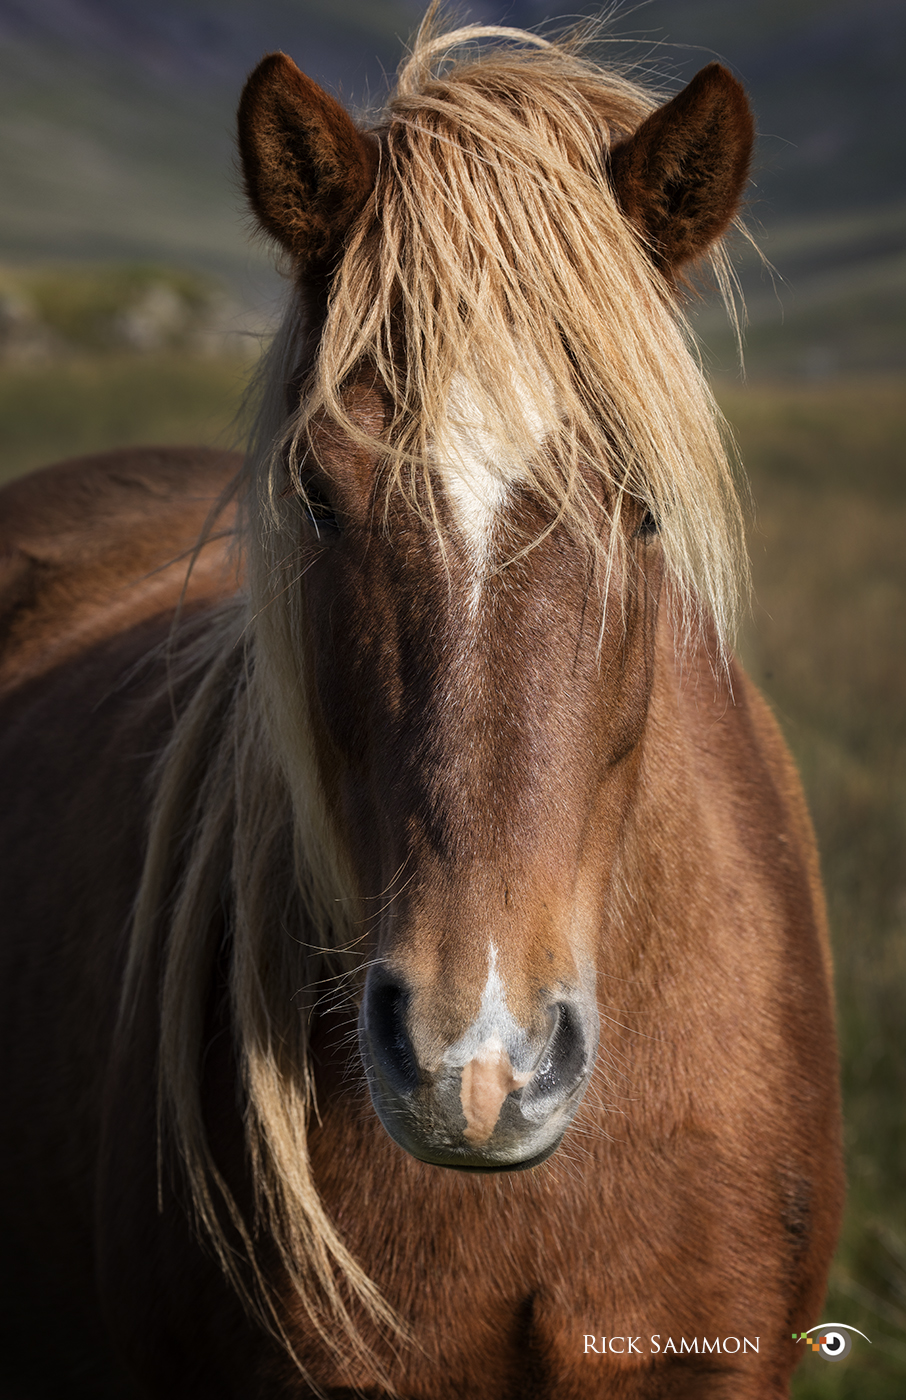 Rick Sammon Iceland Horse.jpg